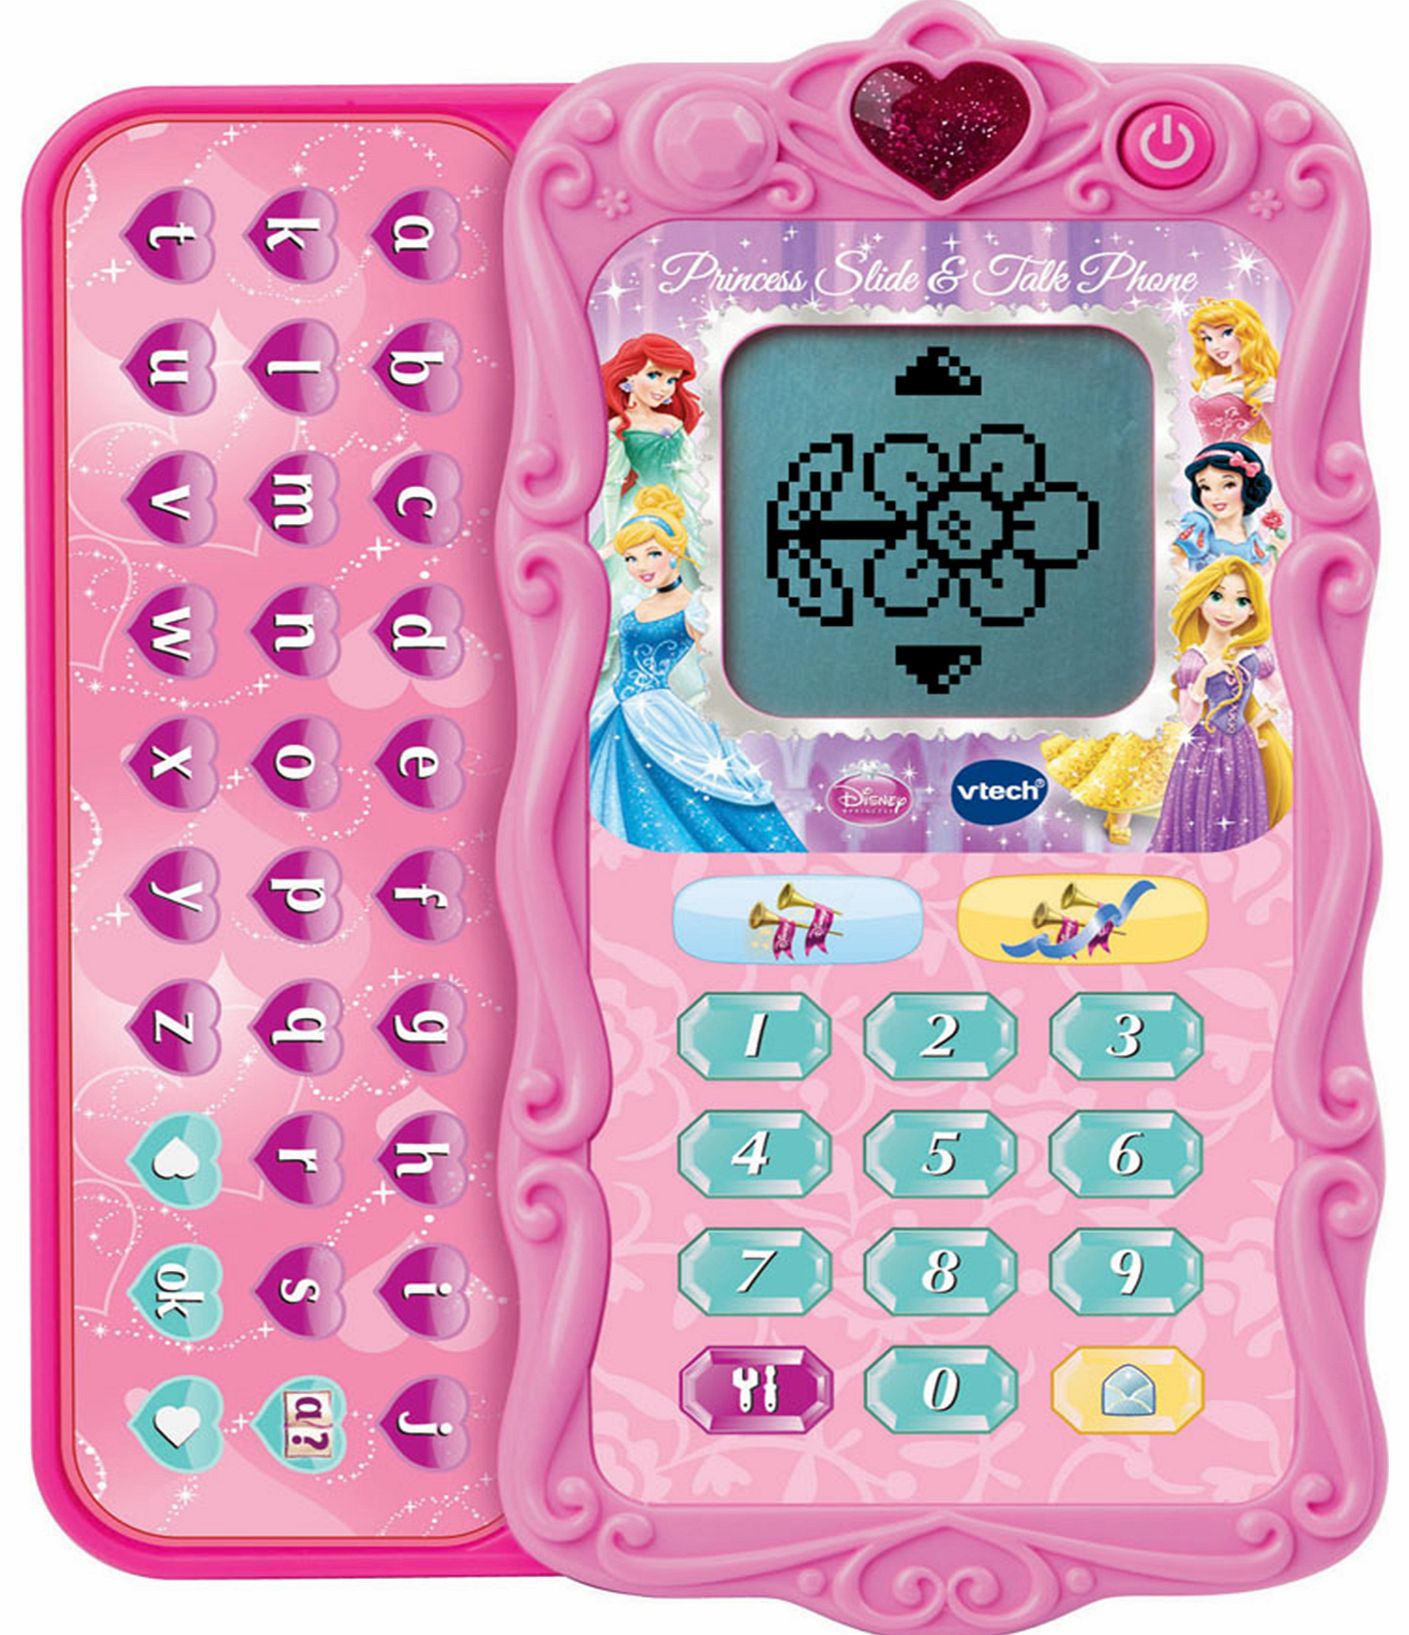 Disney Princess Slide Phone